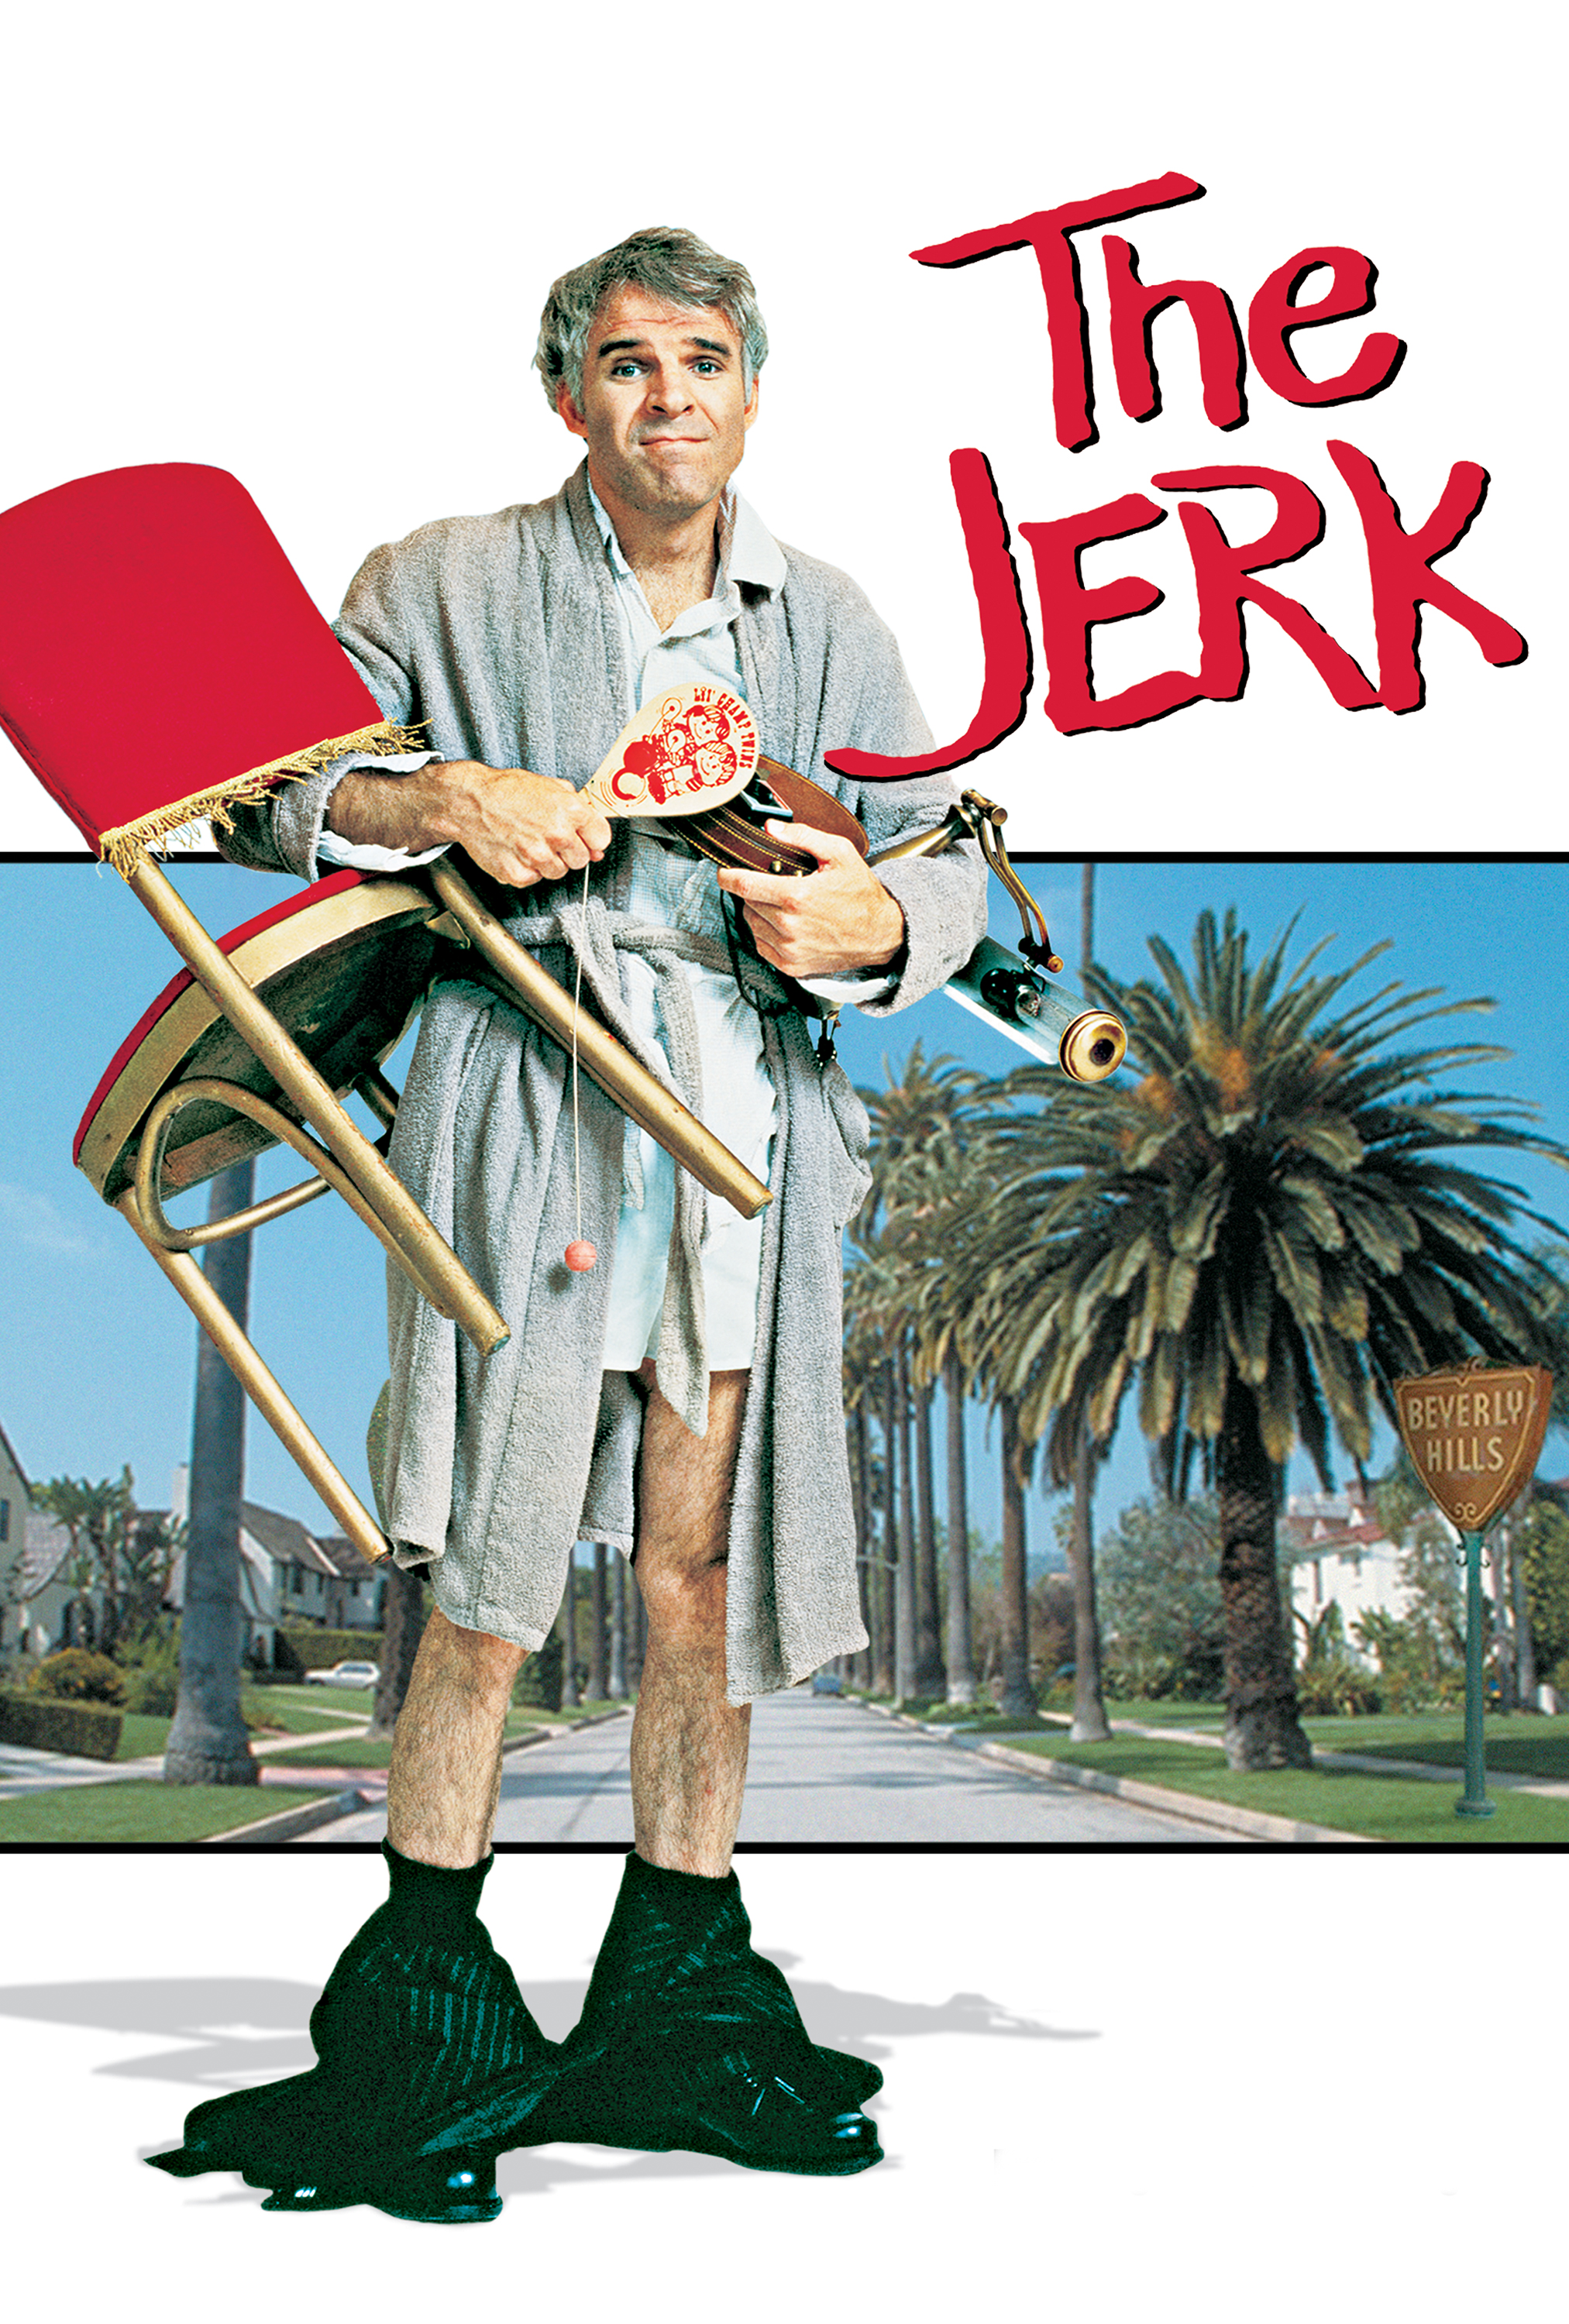 jerks. - watch tv show streaming online